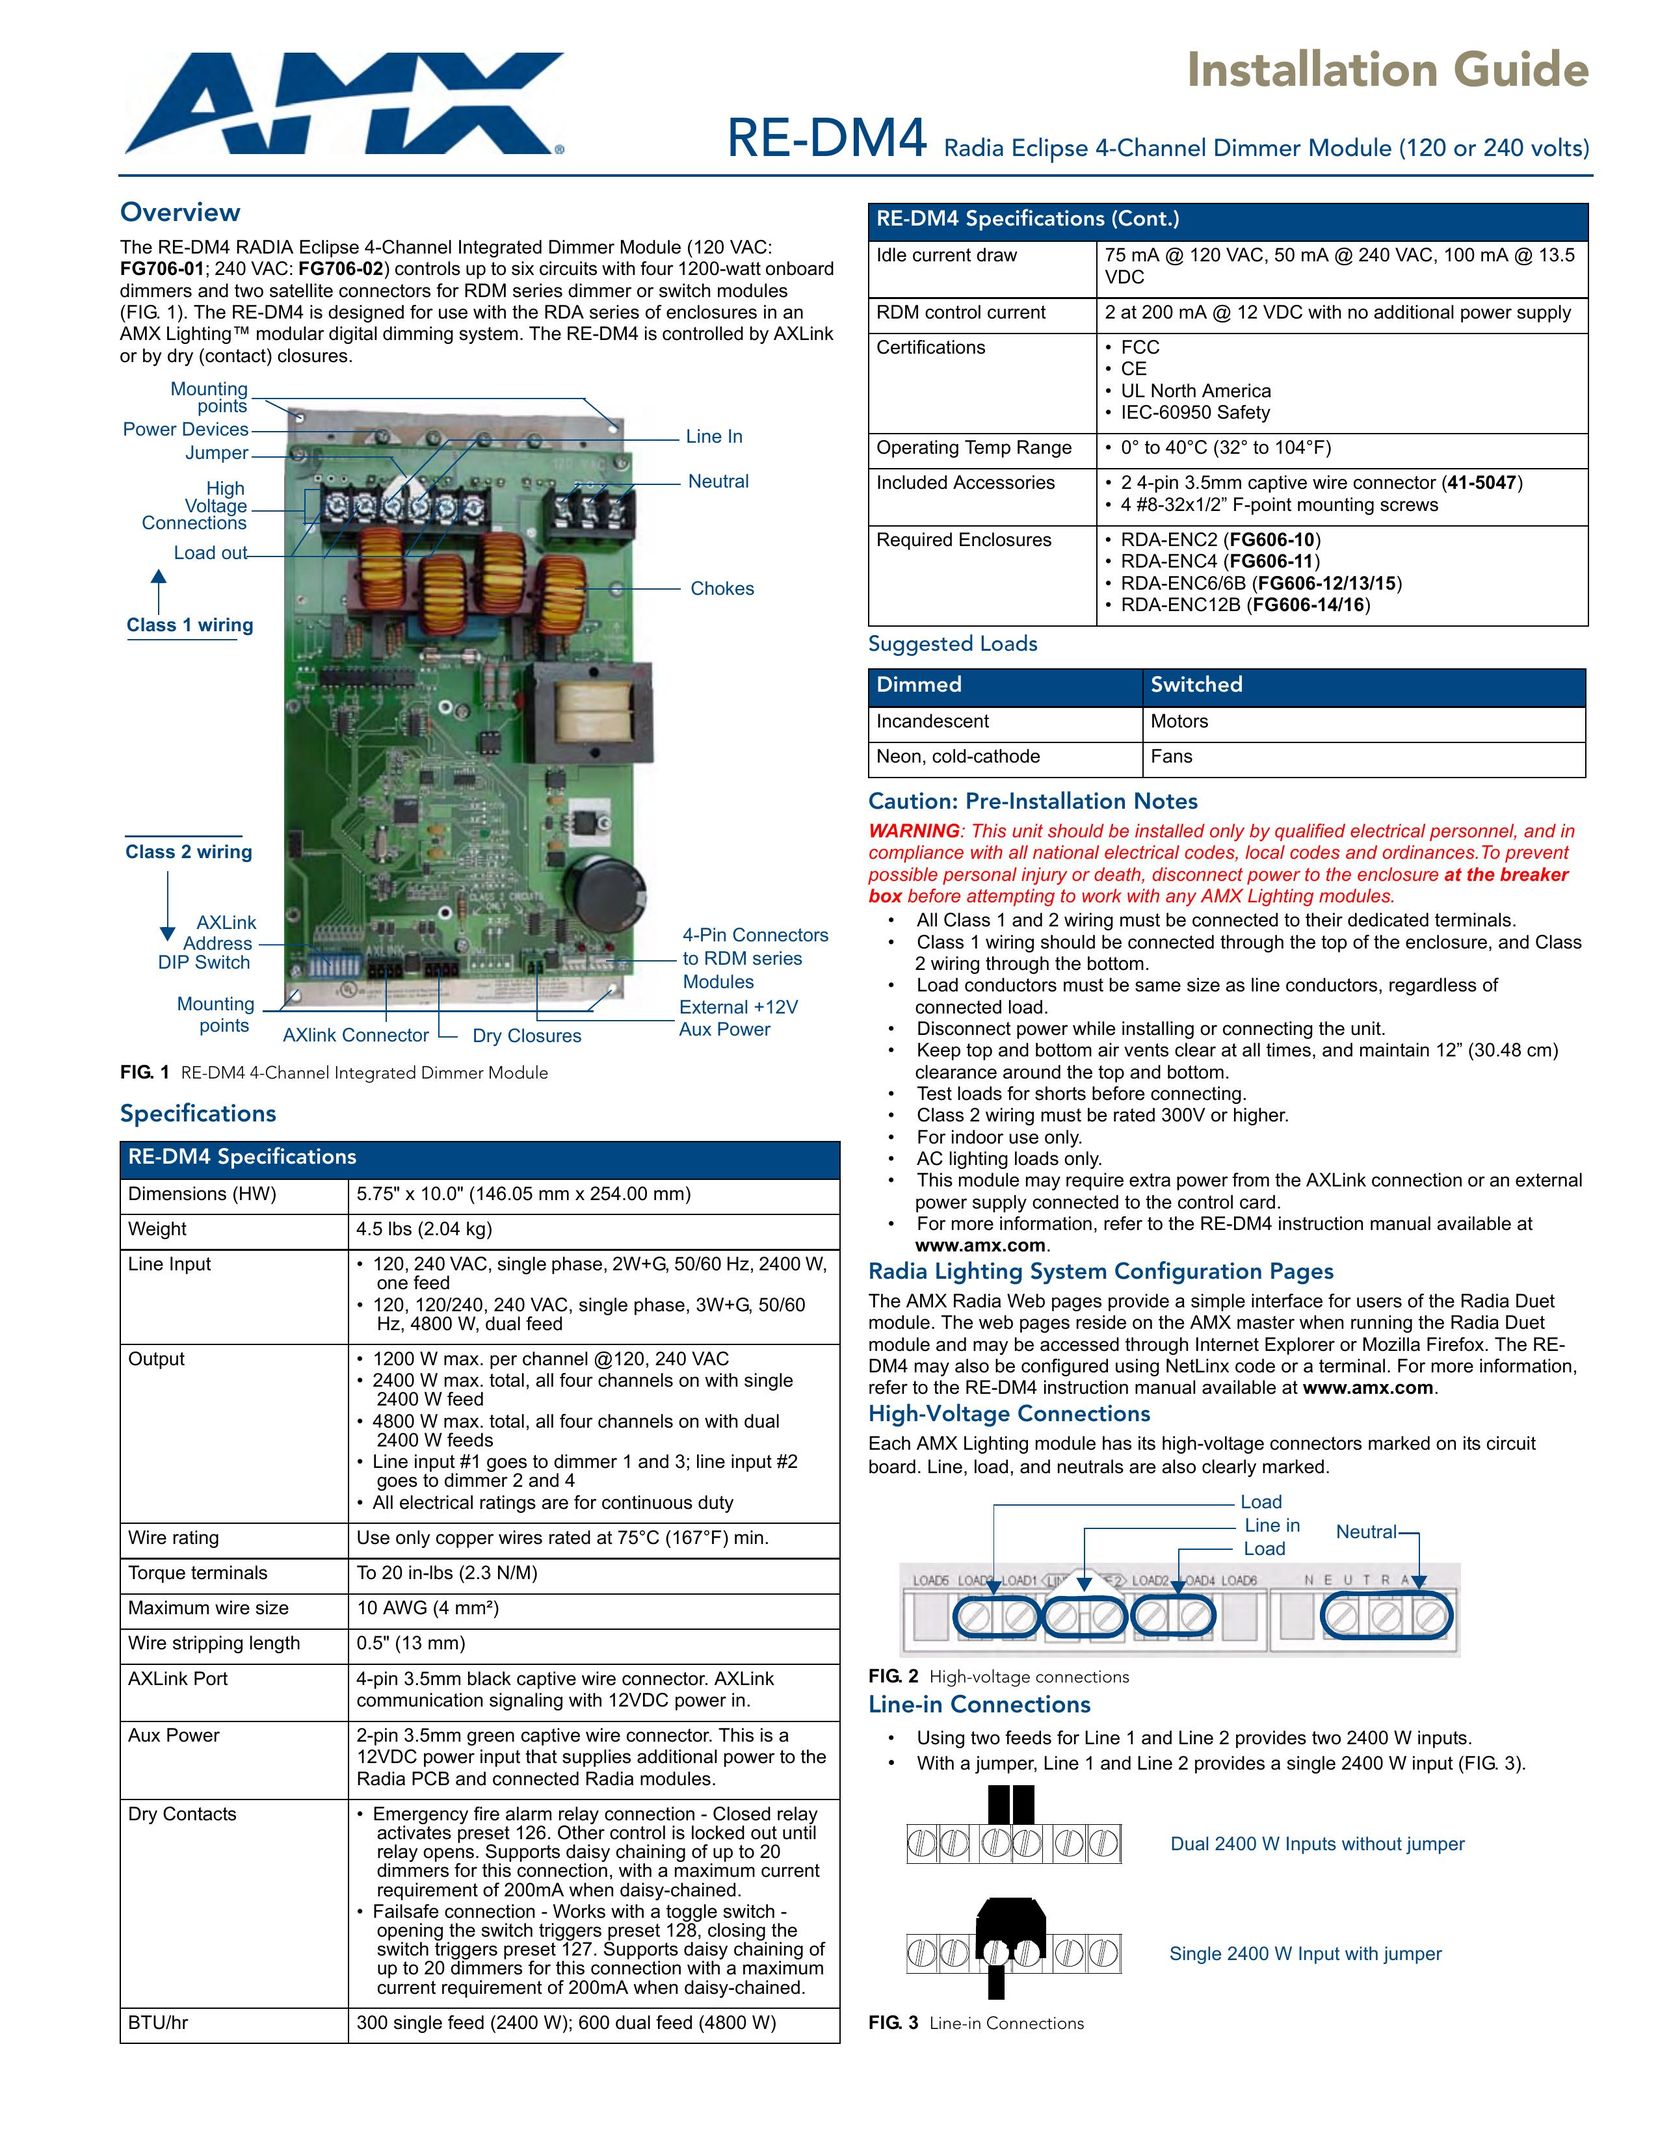 AMX RE-DM4 Switch User Manual